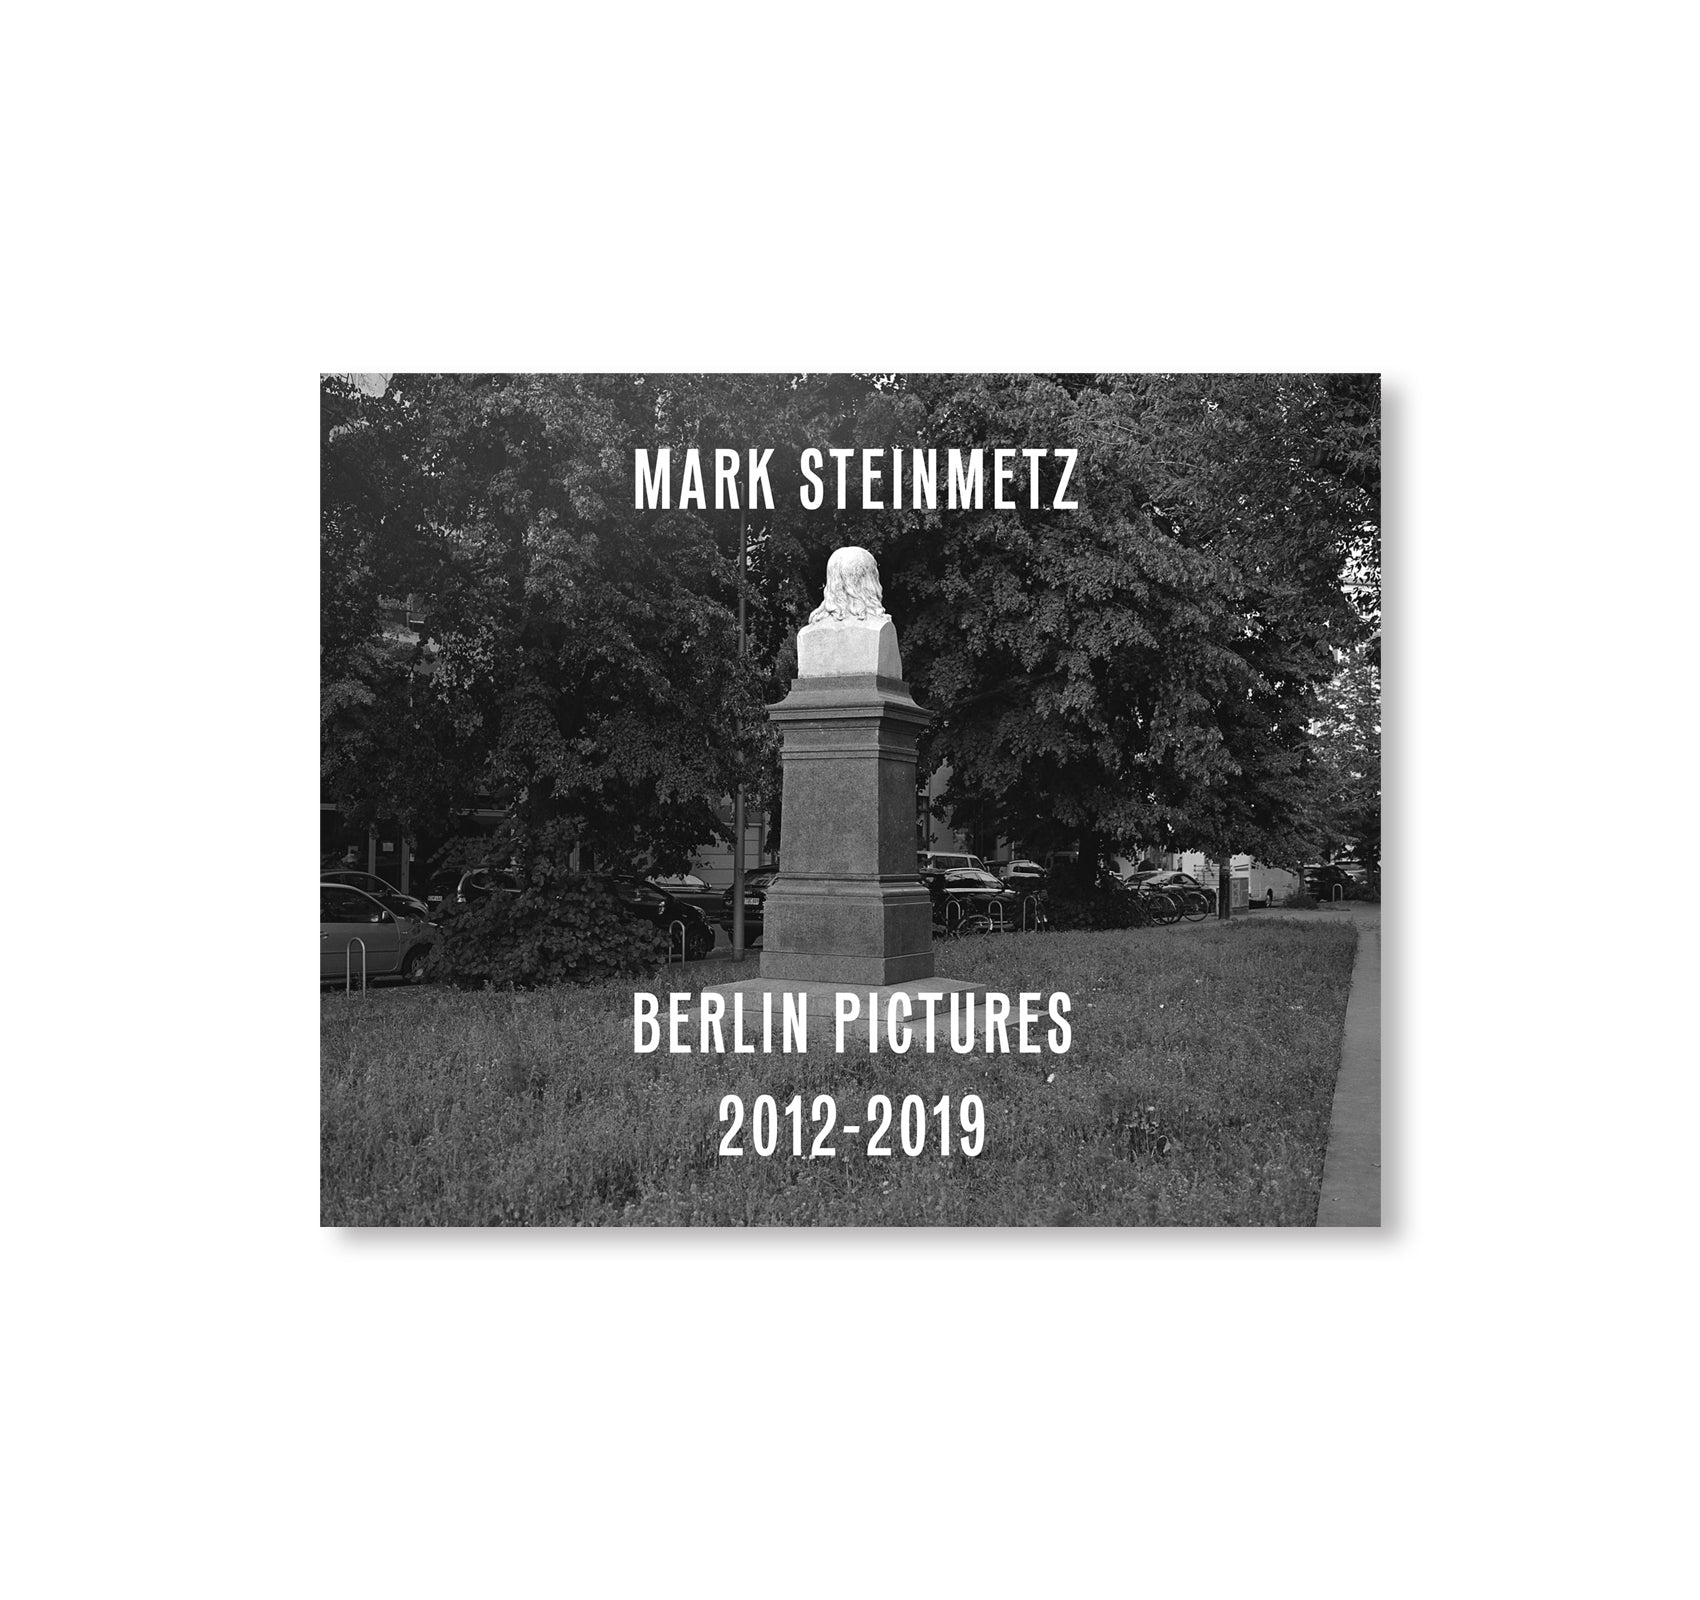 BERLIN PICTURES by Mark Steinmetz